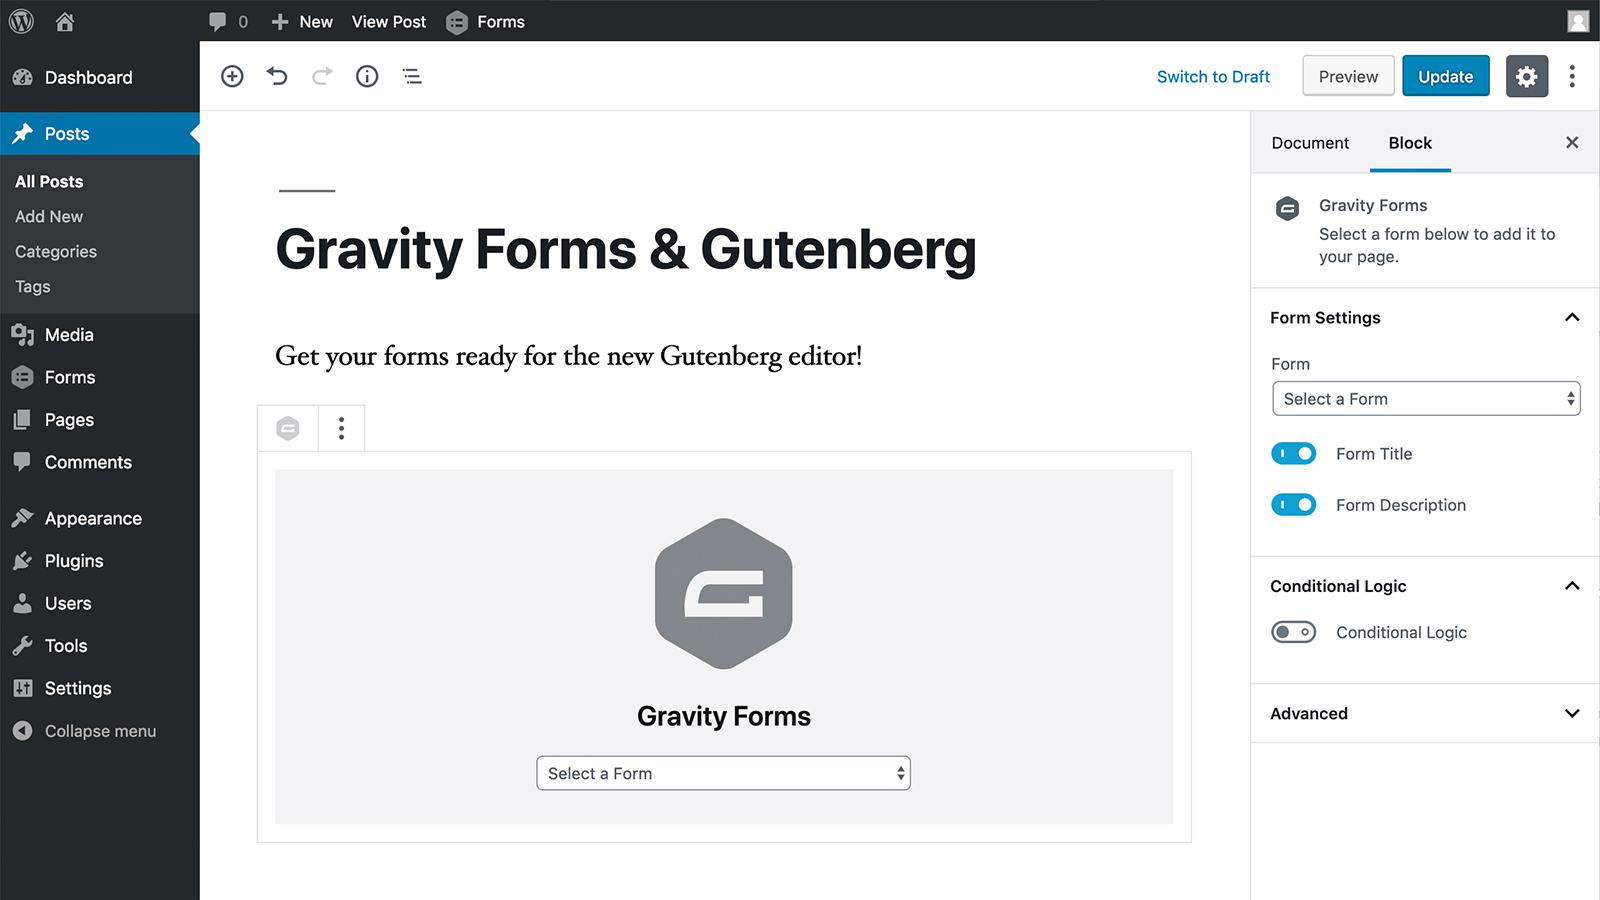 Free Download Gravity Forms v2.6.1 Premium WordPress Plugin - Latest Version